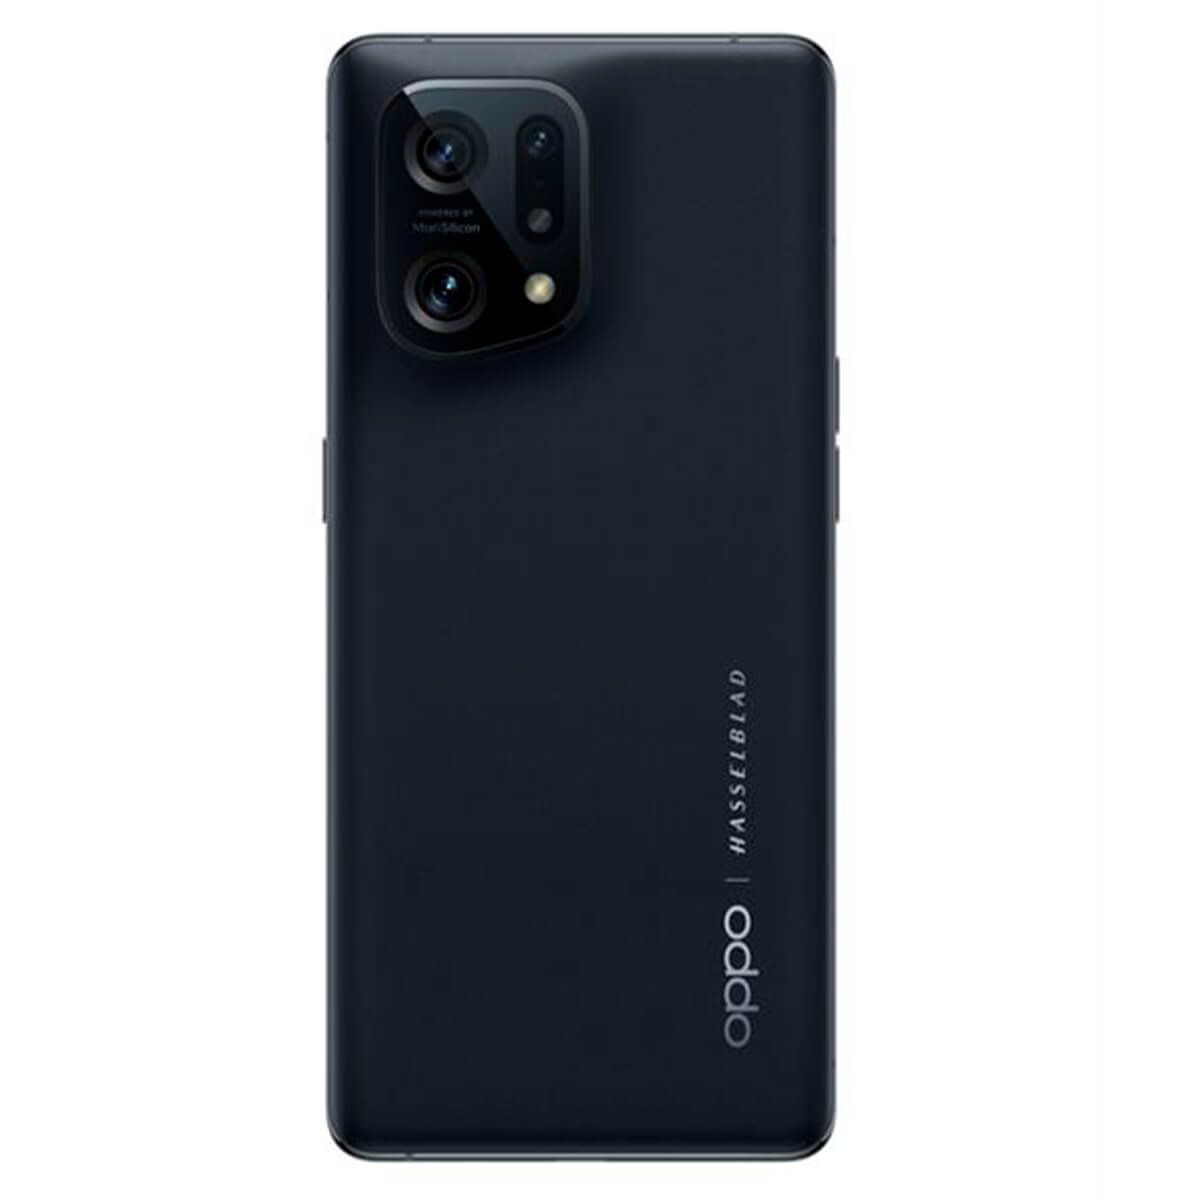 Oppo Find X5 5G 8Go/256Go Noir (Noir) Double SIM